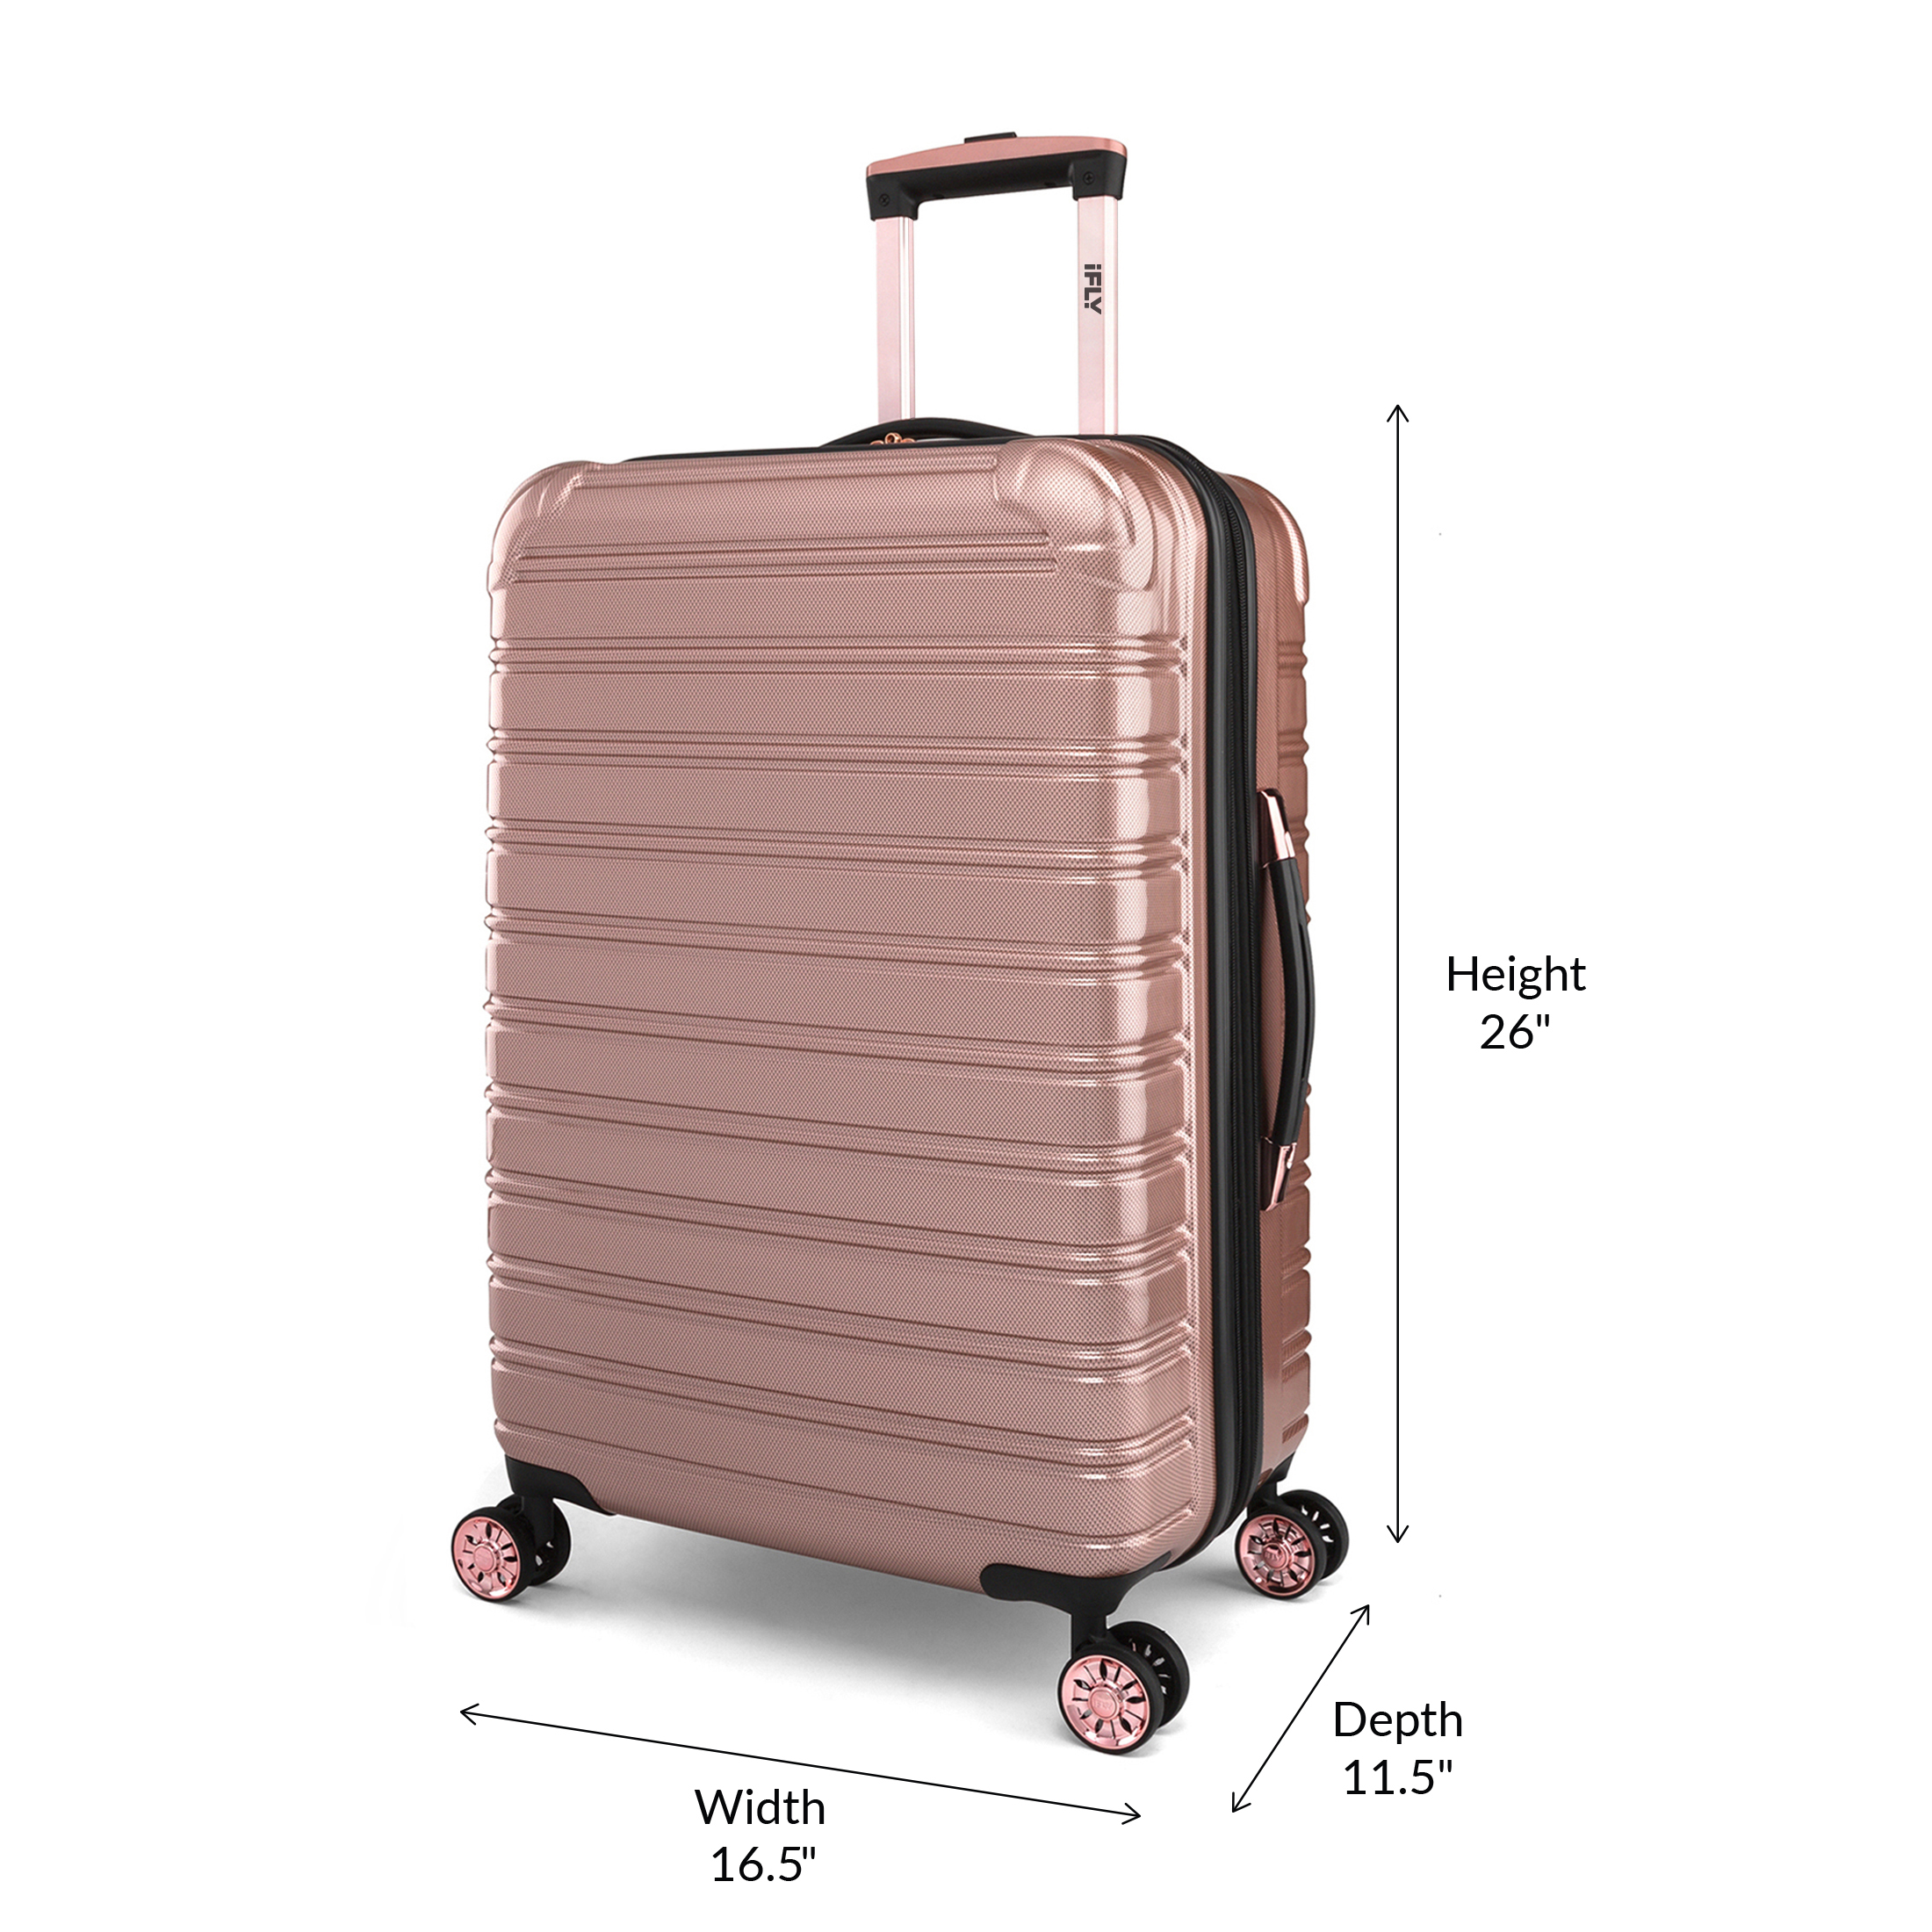 iFLY Hardside Luggage Fibertech 3 Piece Set, 20" Carry-on Luggage, 24" Checked Luggage and 28" Checked Luggage, Rose Gold - image 3 of 12